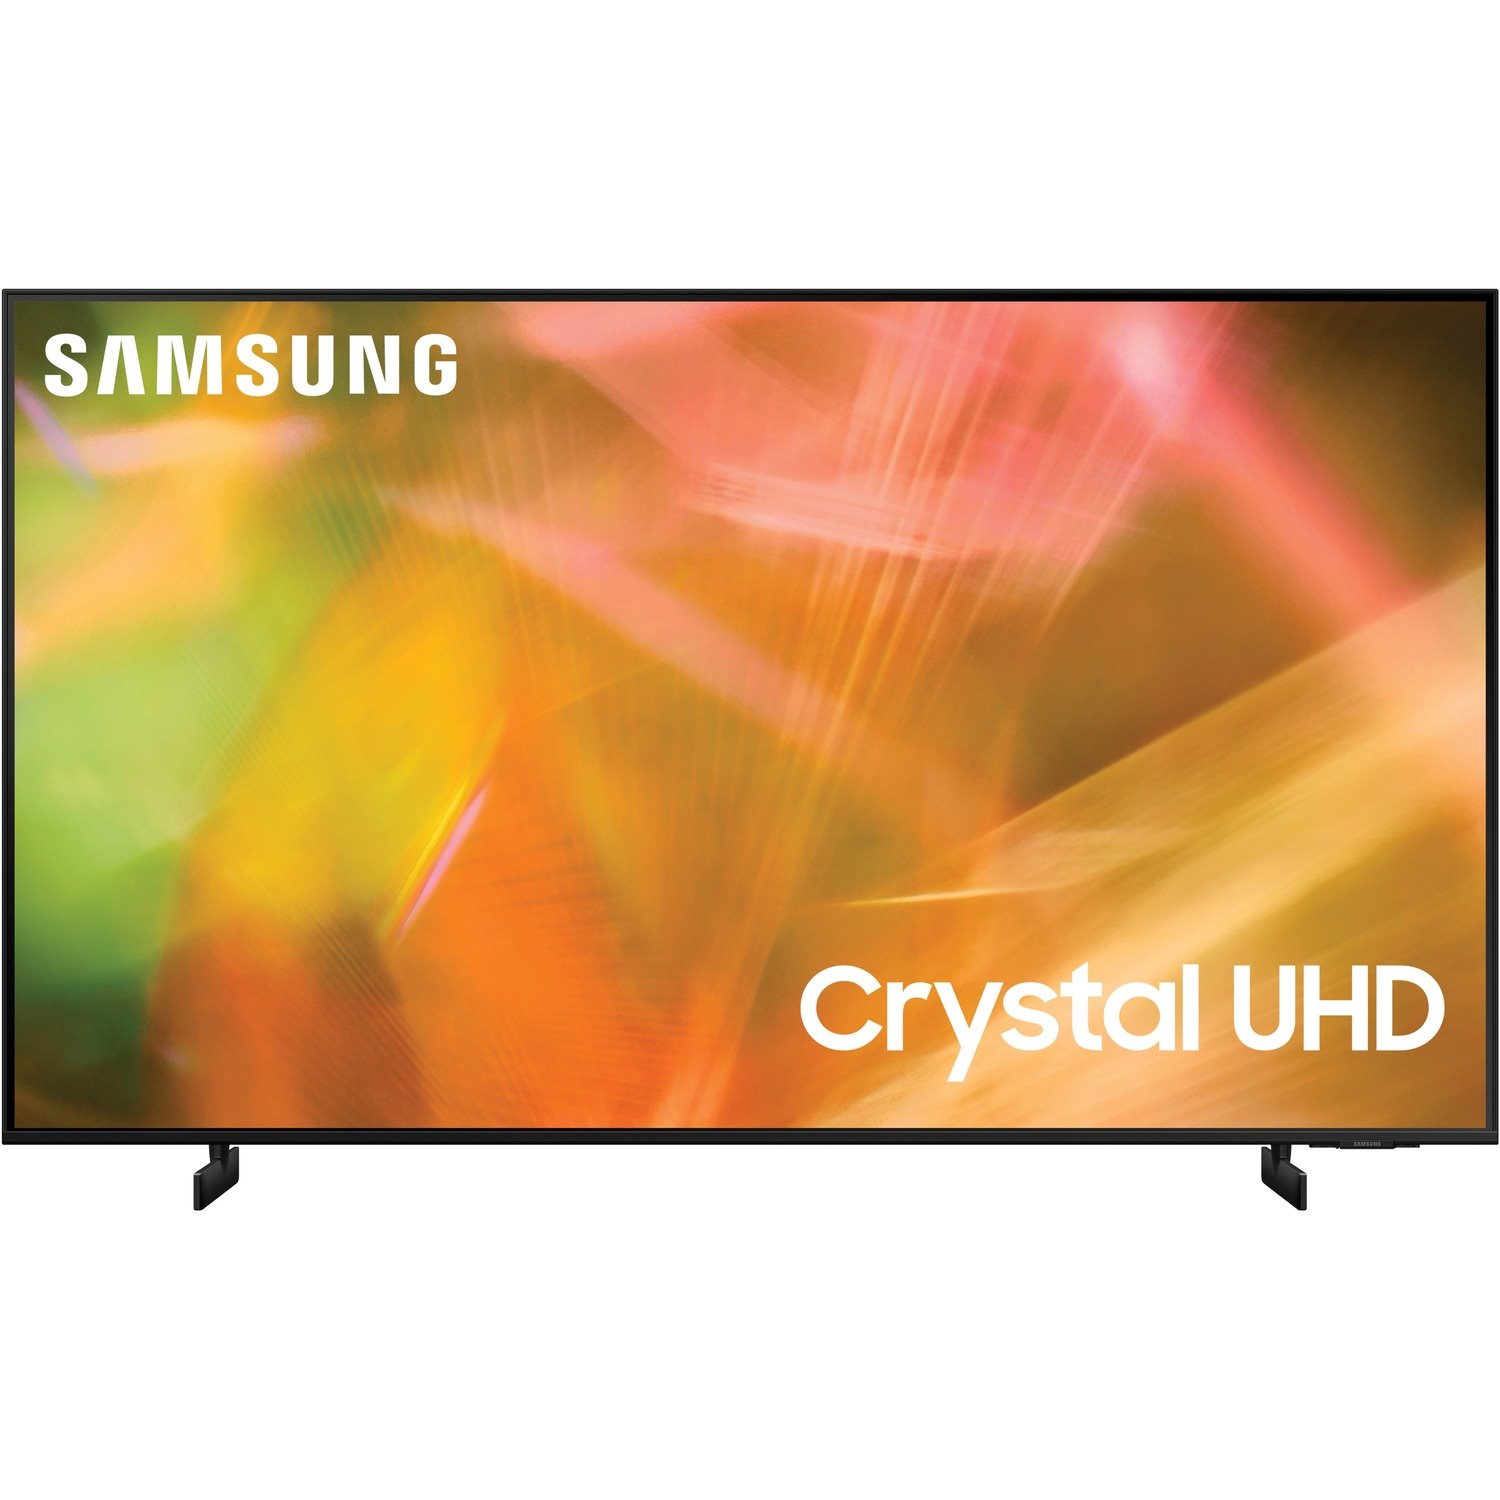 Samsung AU8000 UN75AU8000F 74.5" Smart LED-LCD TV - 4K UHDTV - Black